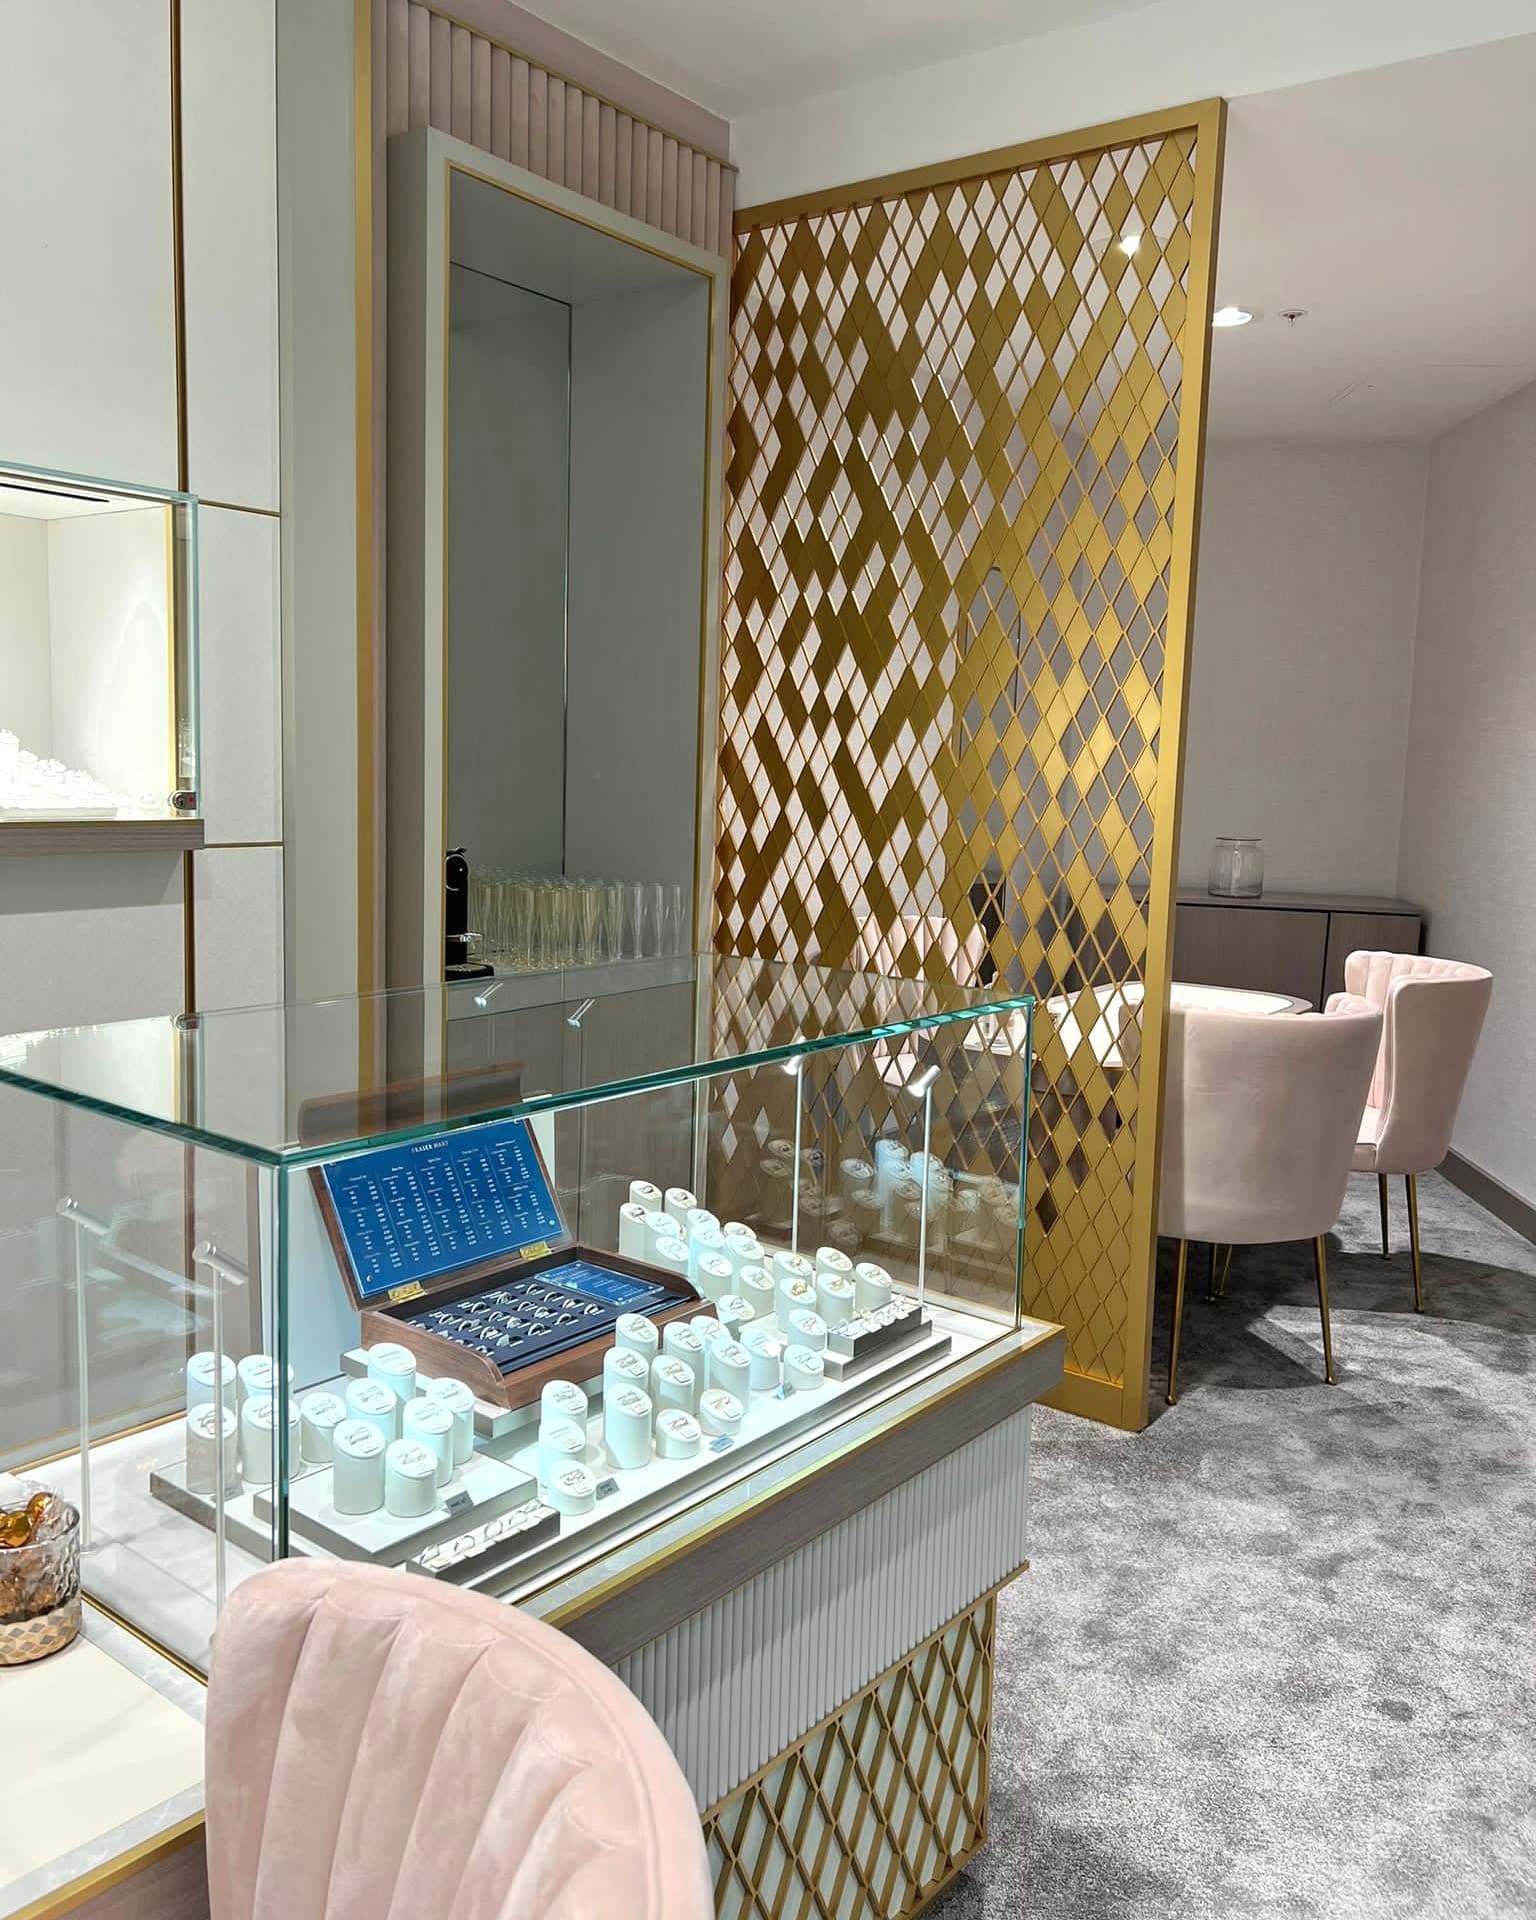 fraser hart luxury jewellry shopfitting room divider with artistic design